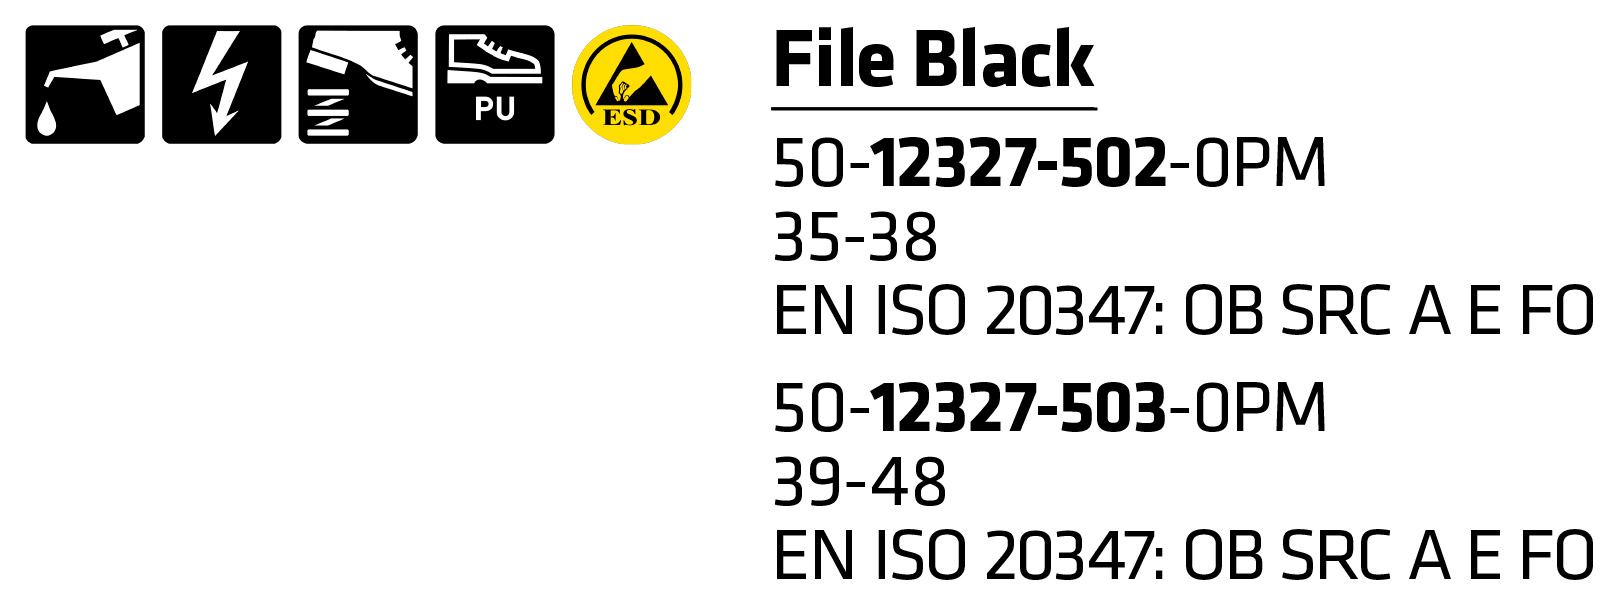 File_Black-50-12327-502-0PM